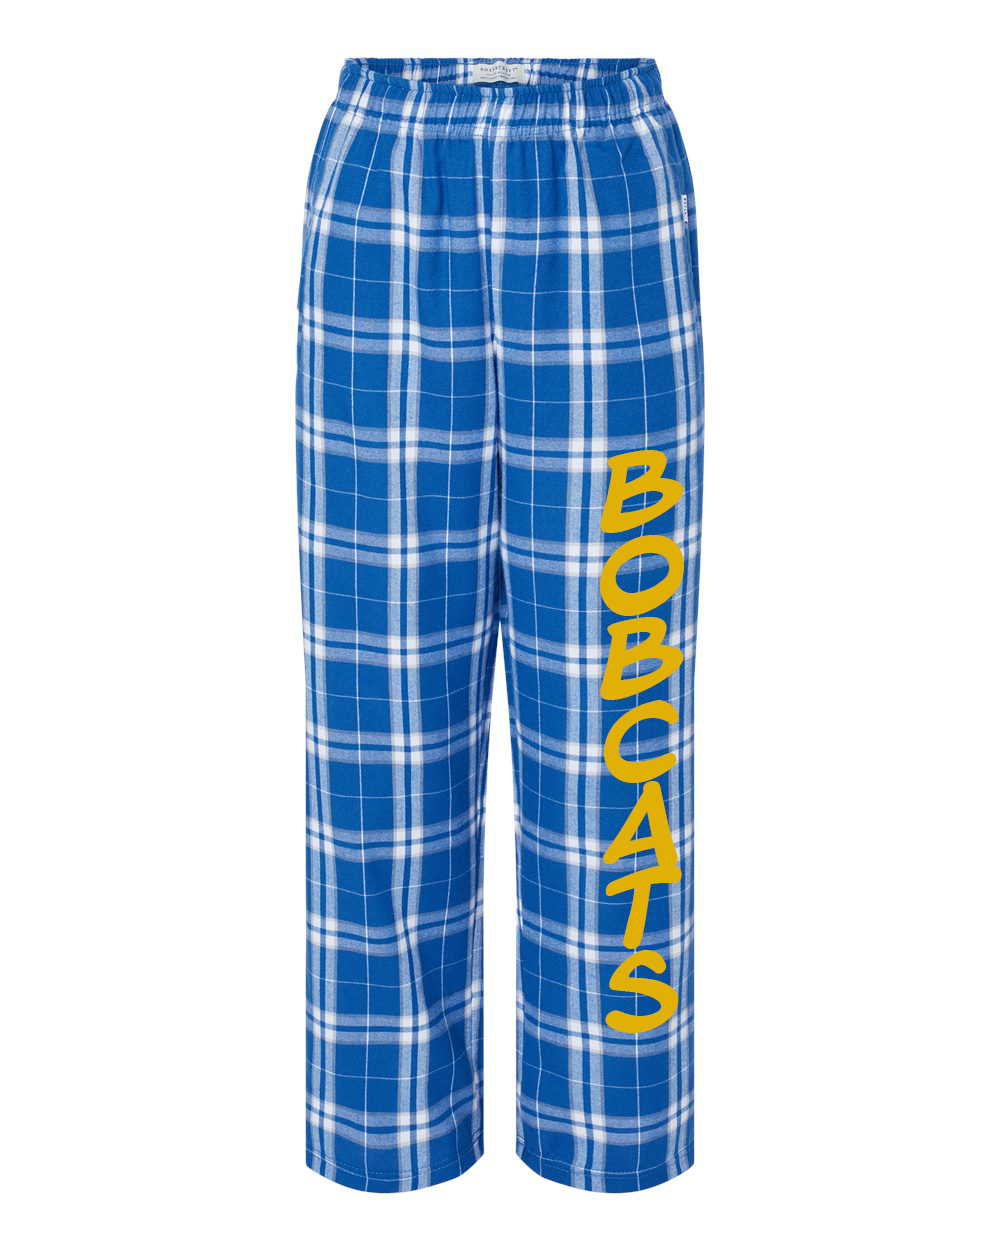 Team Color Pajama Pants (Somonauk Bobcats & Sandwich Indians)